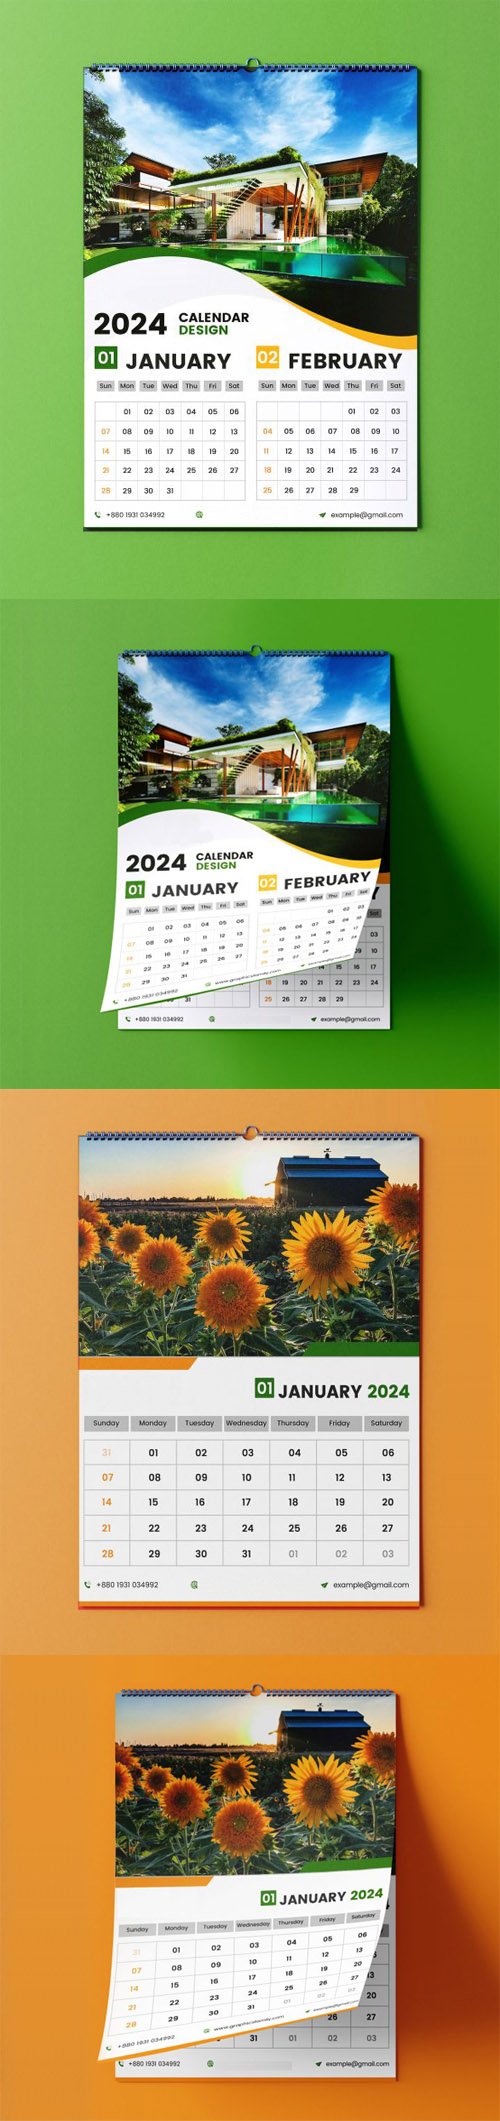 2024 Creative Photography Wall Calendars PSD Templates